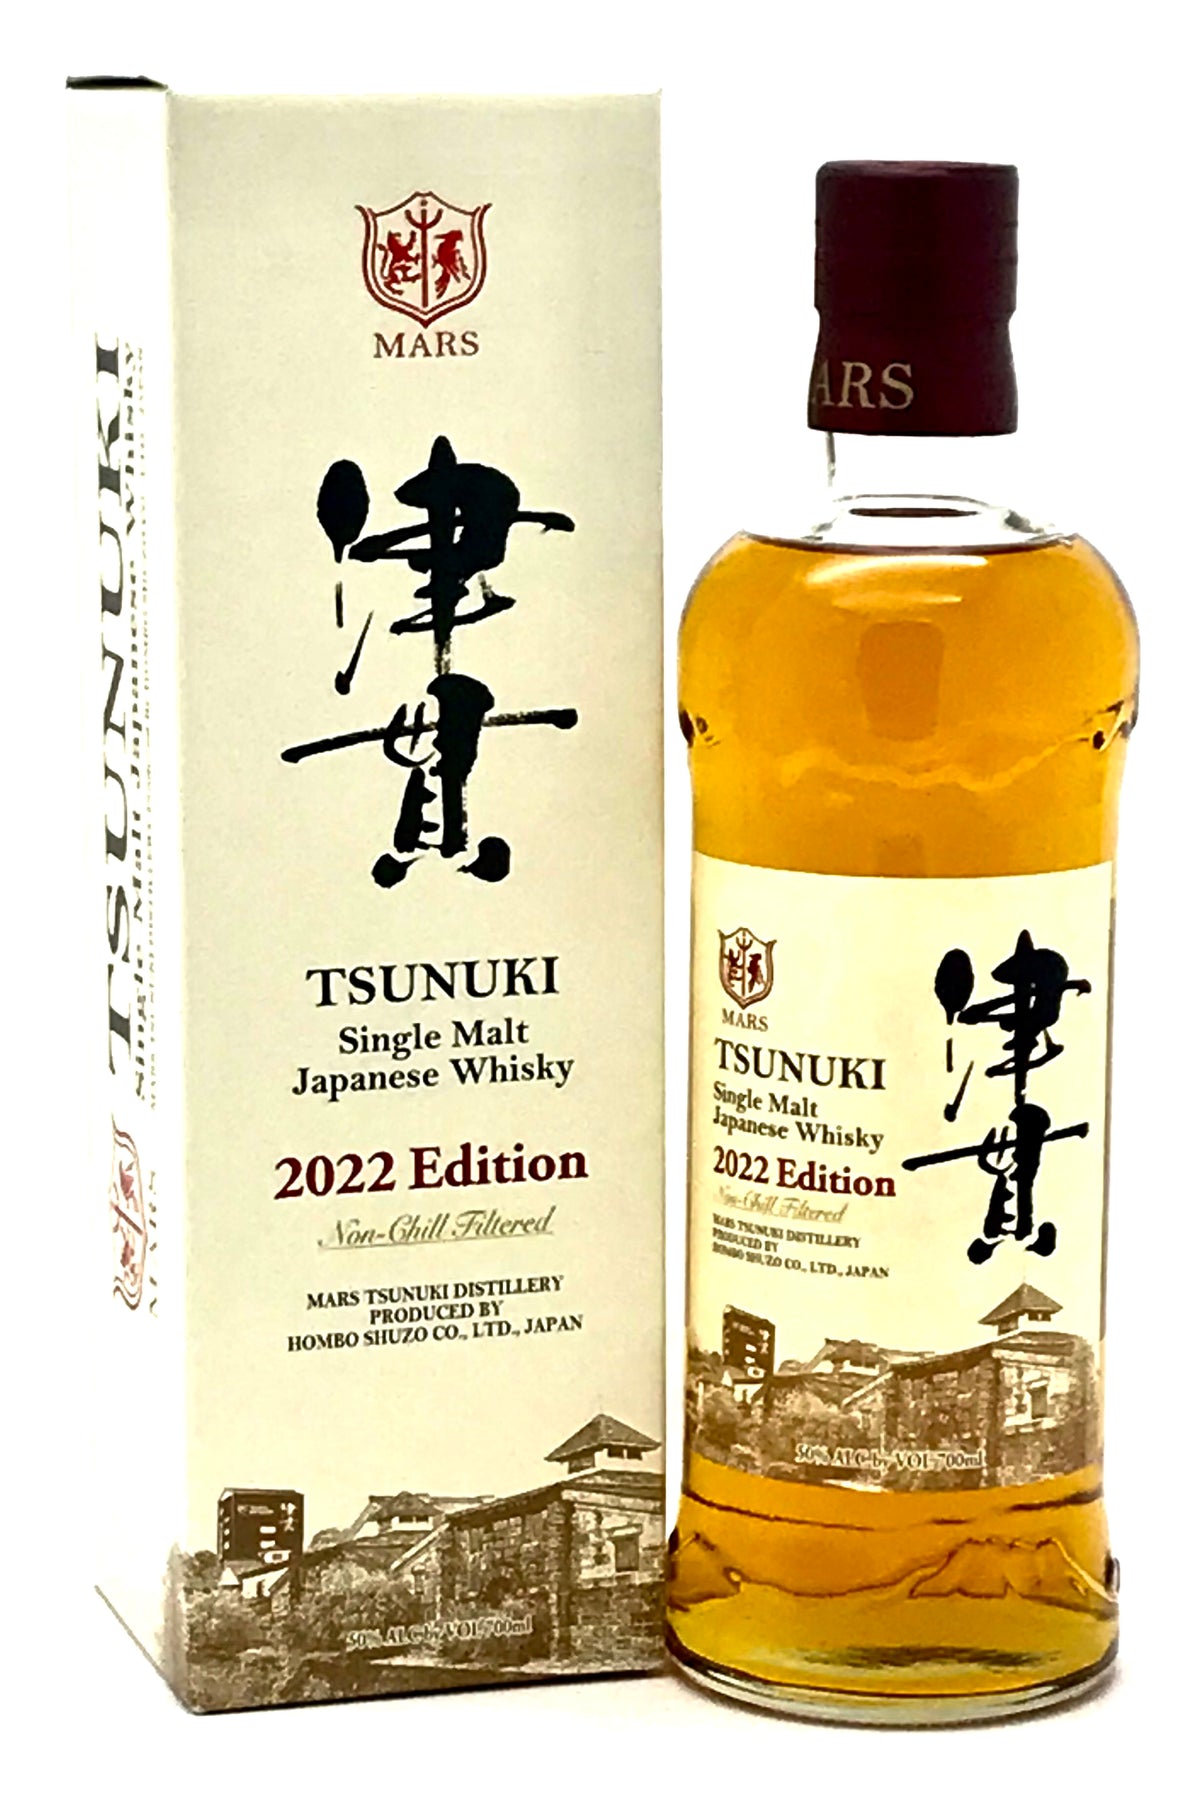 Mars Whisky Komagatake Tsunuki Aging 2022 Single Cask Single Malt Japanese Whisky